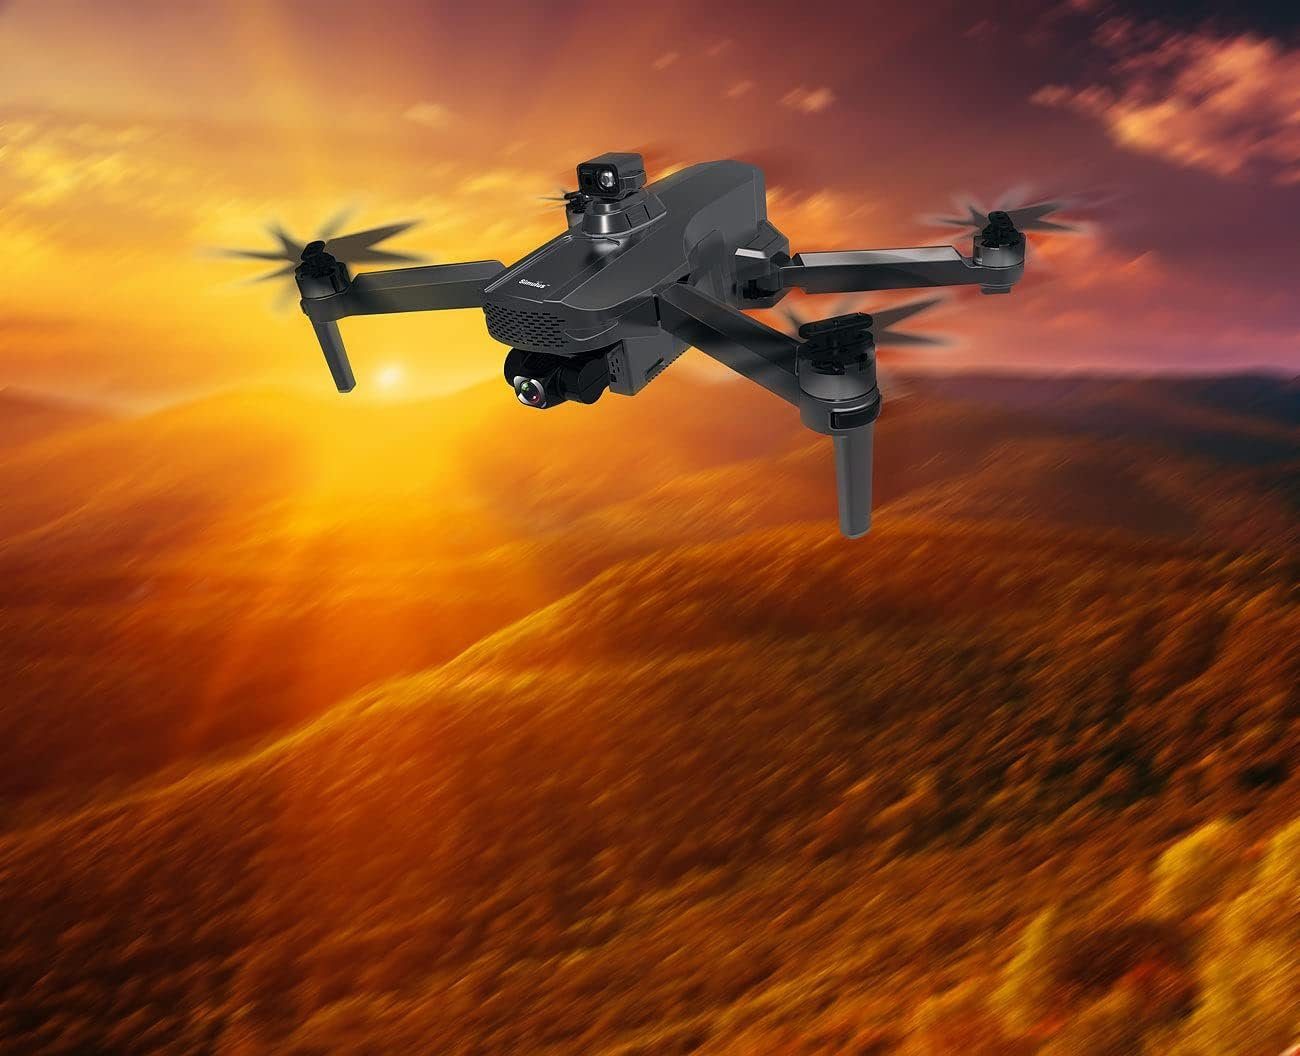 GPS-Drohne, -Abstandssensor, Simulus 4K-Cam Drohne Faltbare 2160 Brushless-Motor) (3840 Drone x pixels,